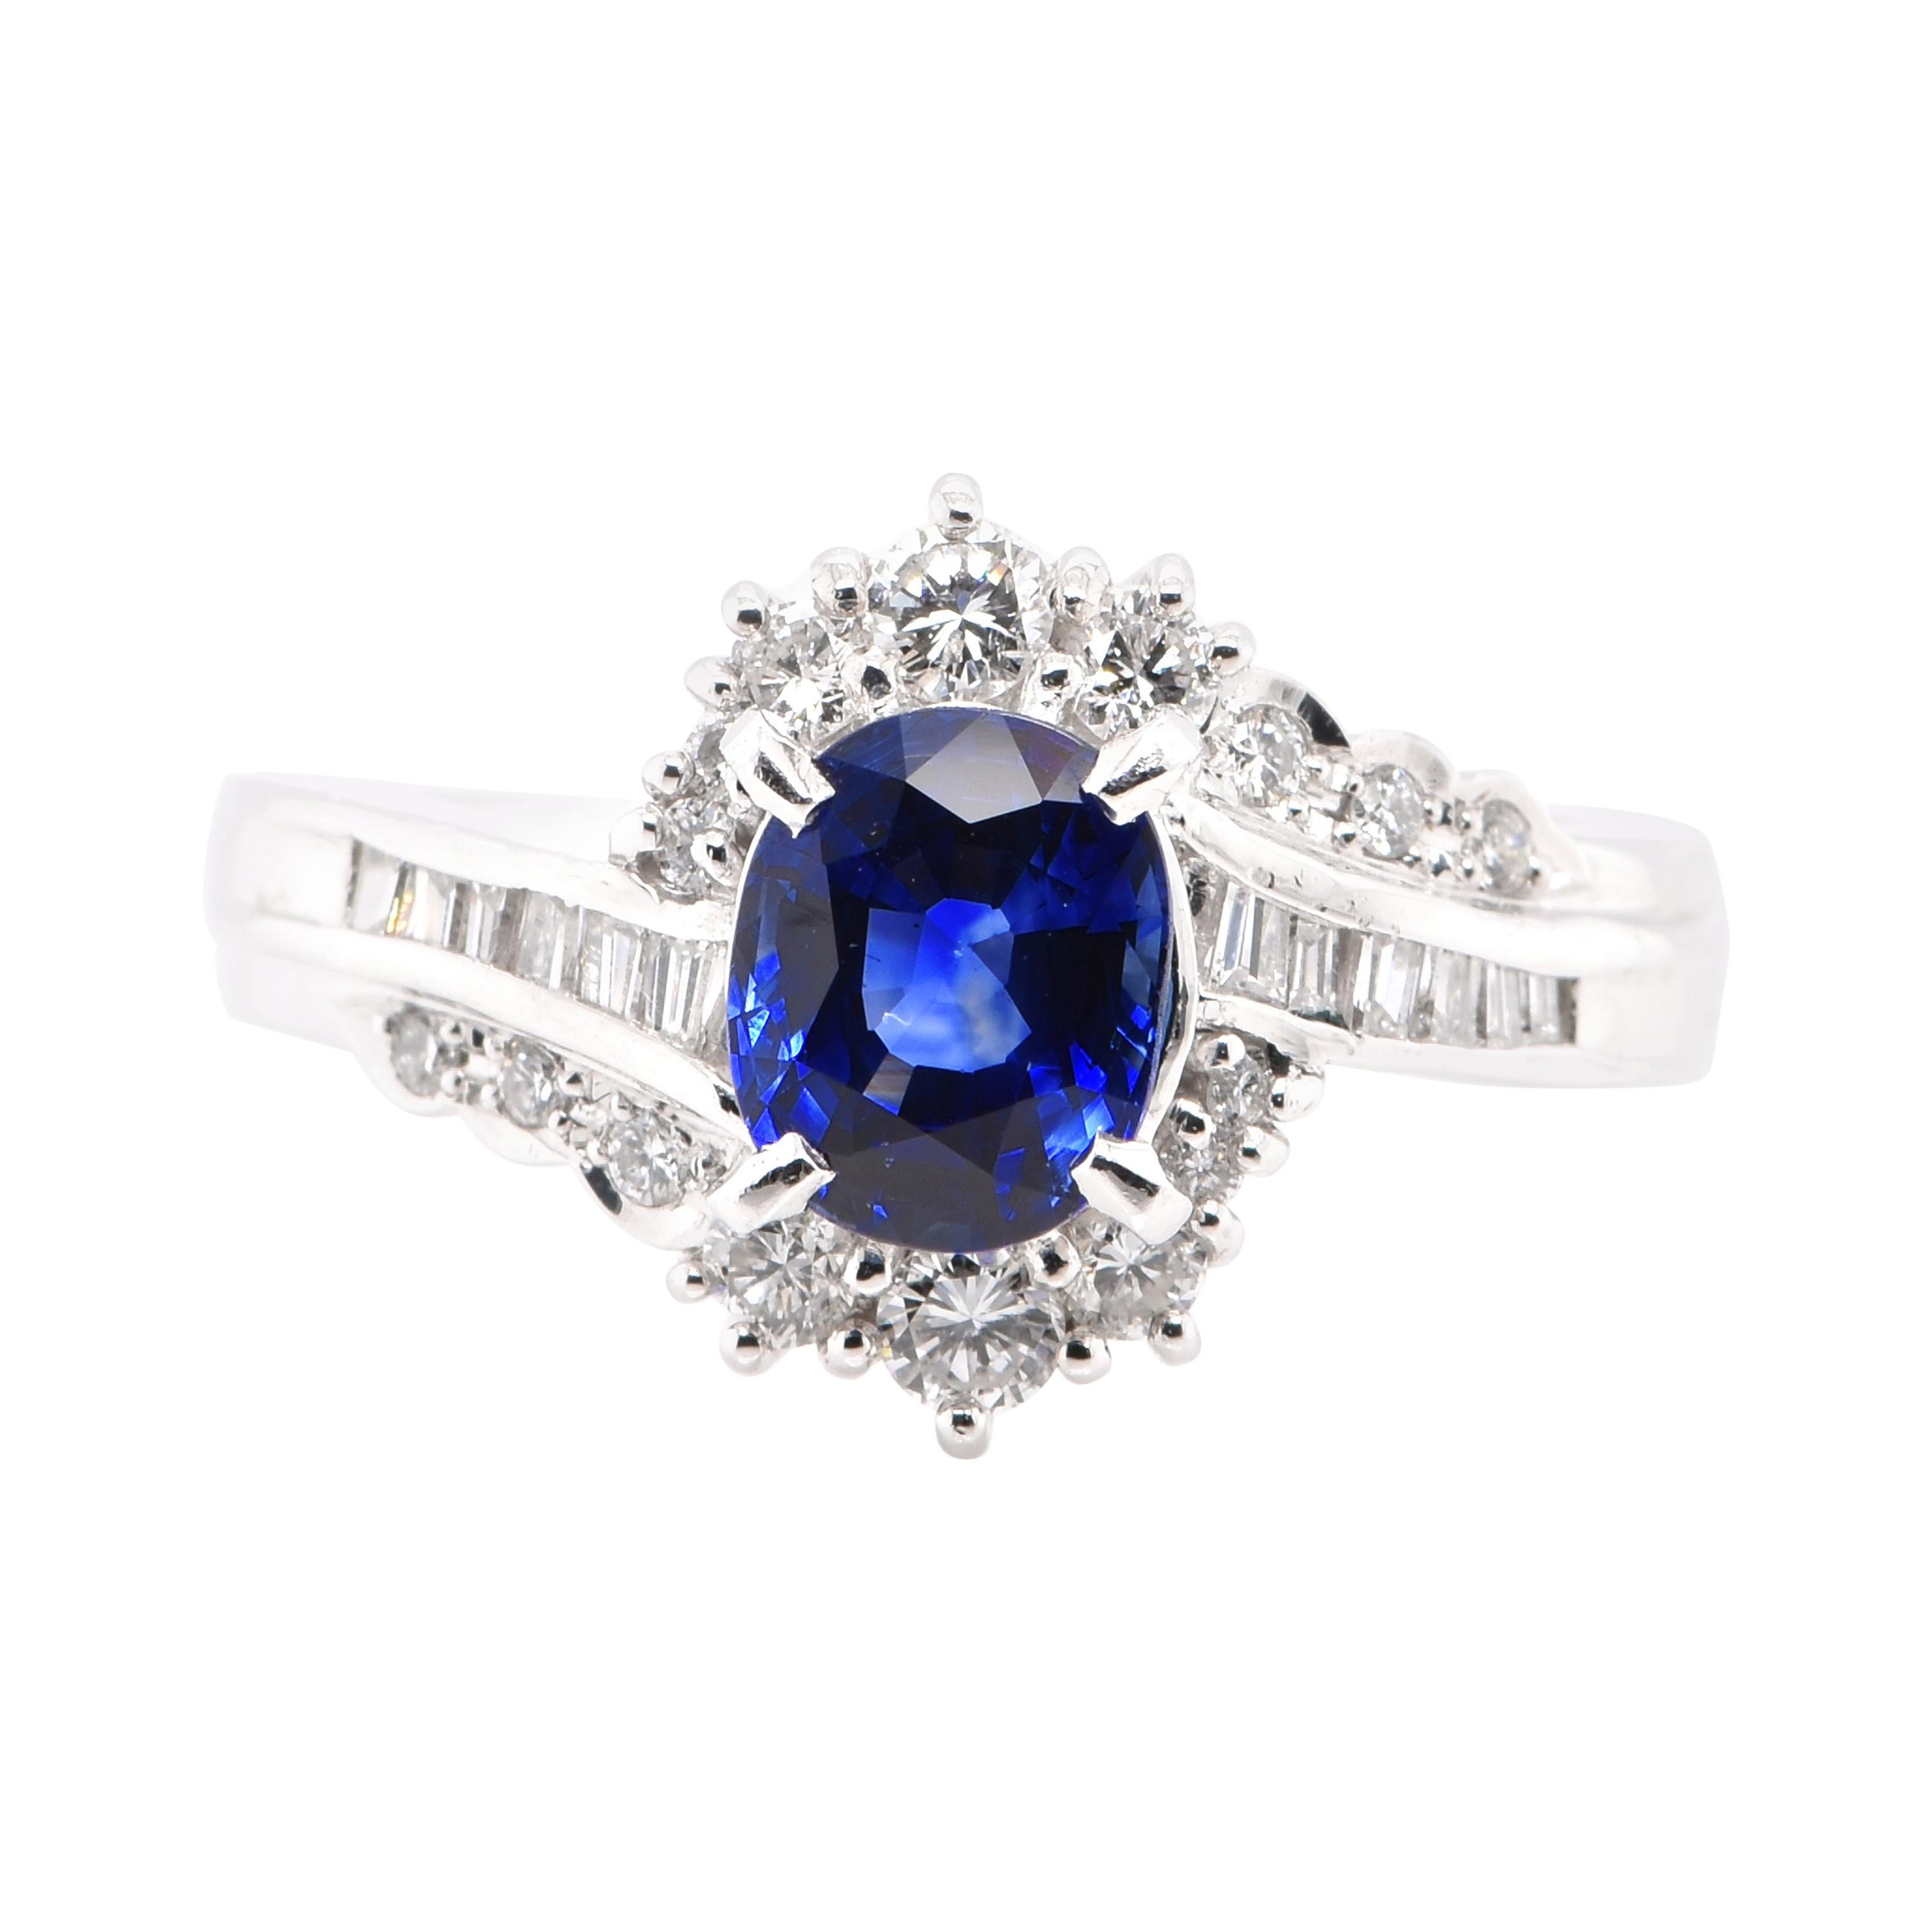 1.52 Carat Natural Royal Blue Sapphire and Diamond Ring Set in Platinum